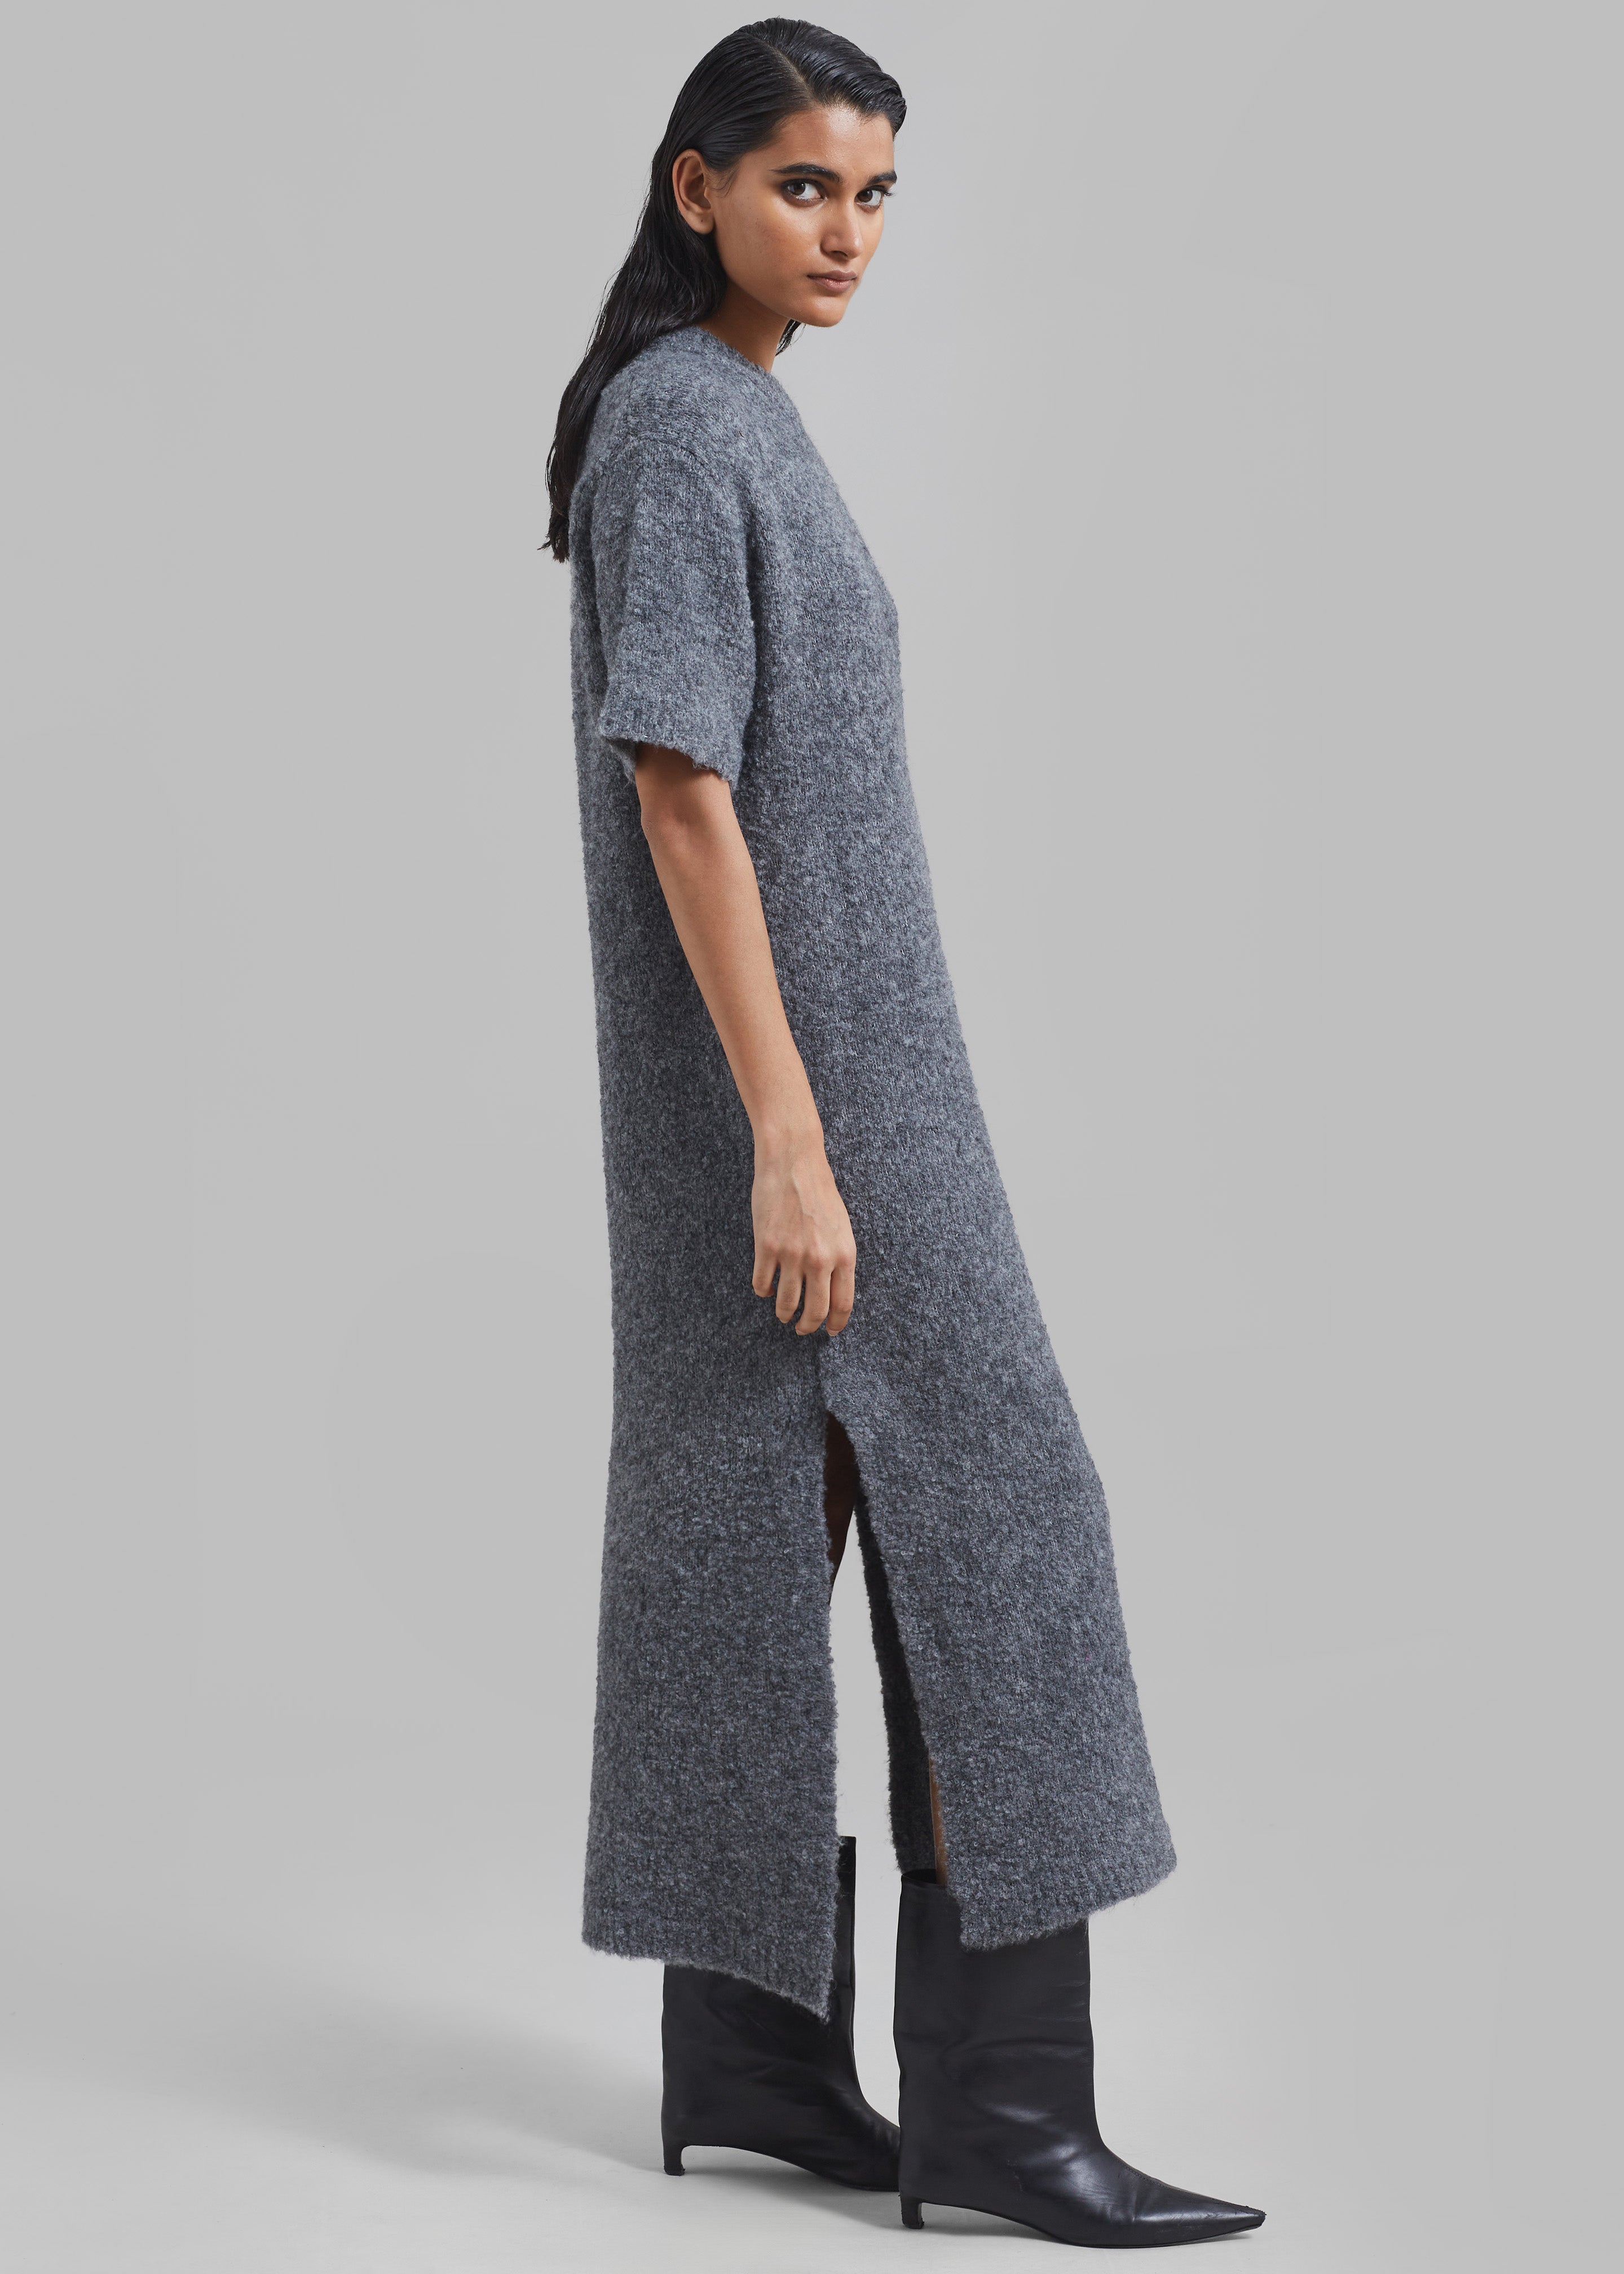 andmary luz knit set dress (o^^o)様購入専用 - clinicaviterbo.com.br